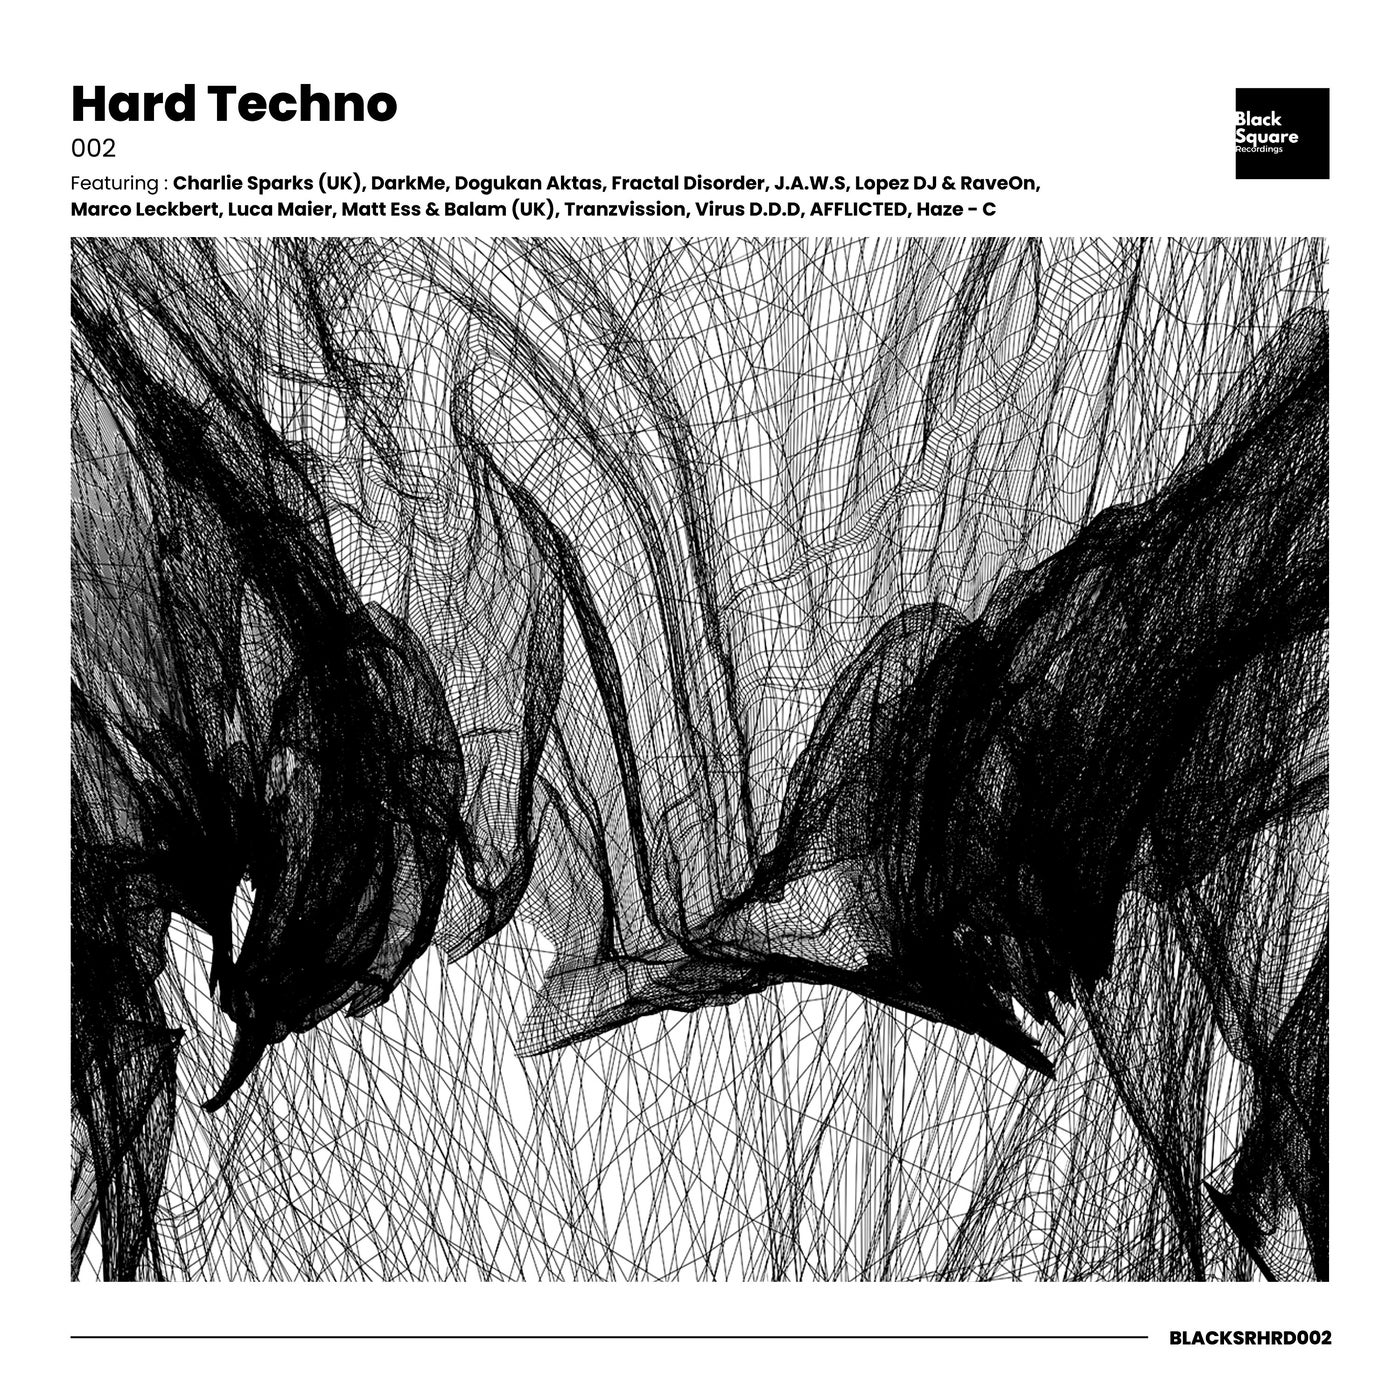 Dogukan Aktas, DarkMe – Hard Techno 002 [BLACKSRHRD002]